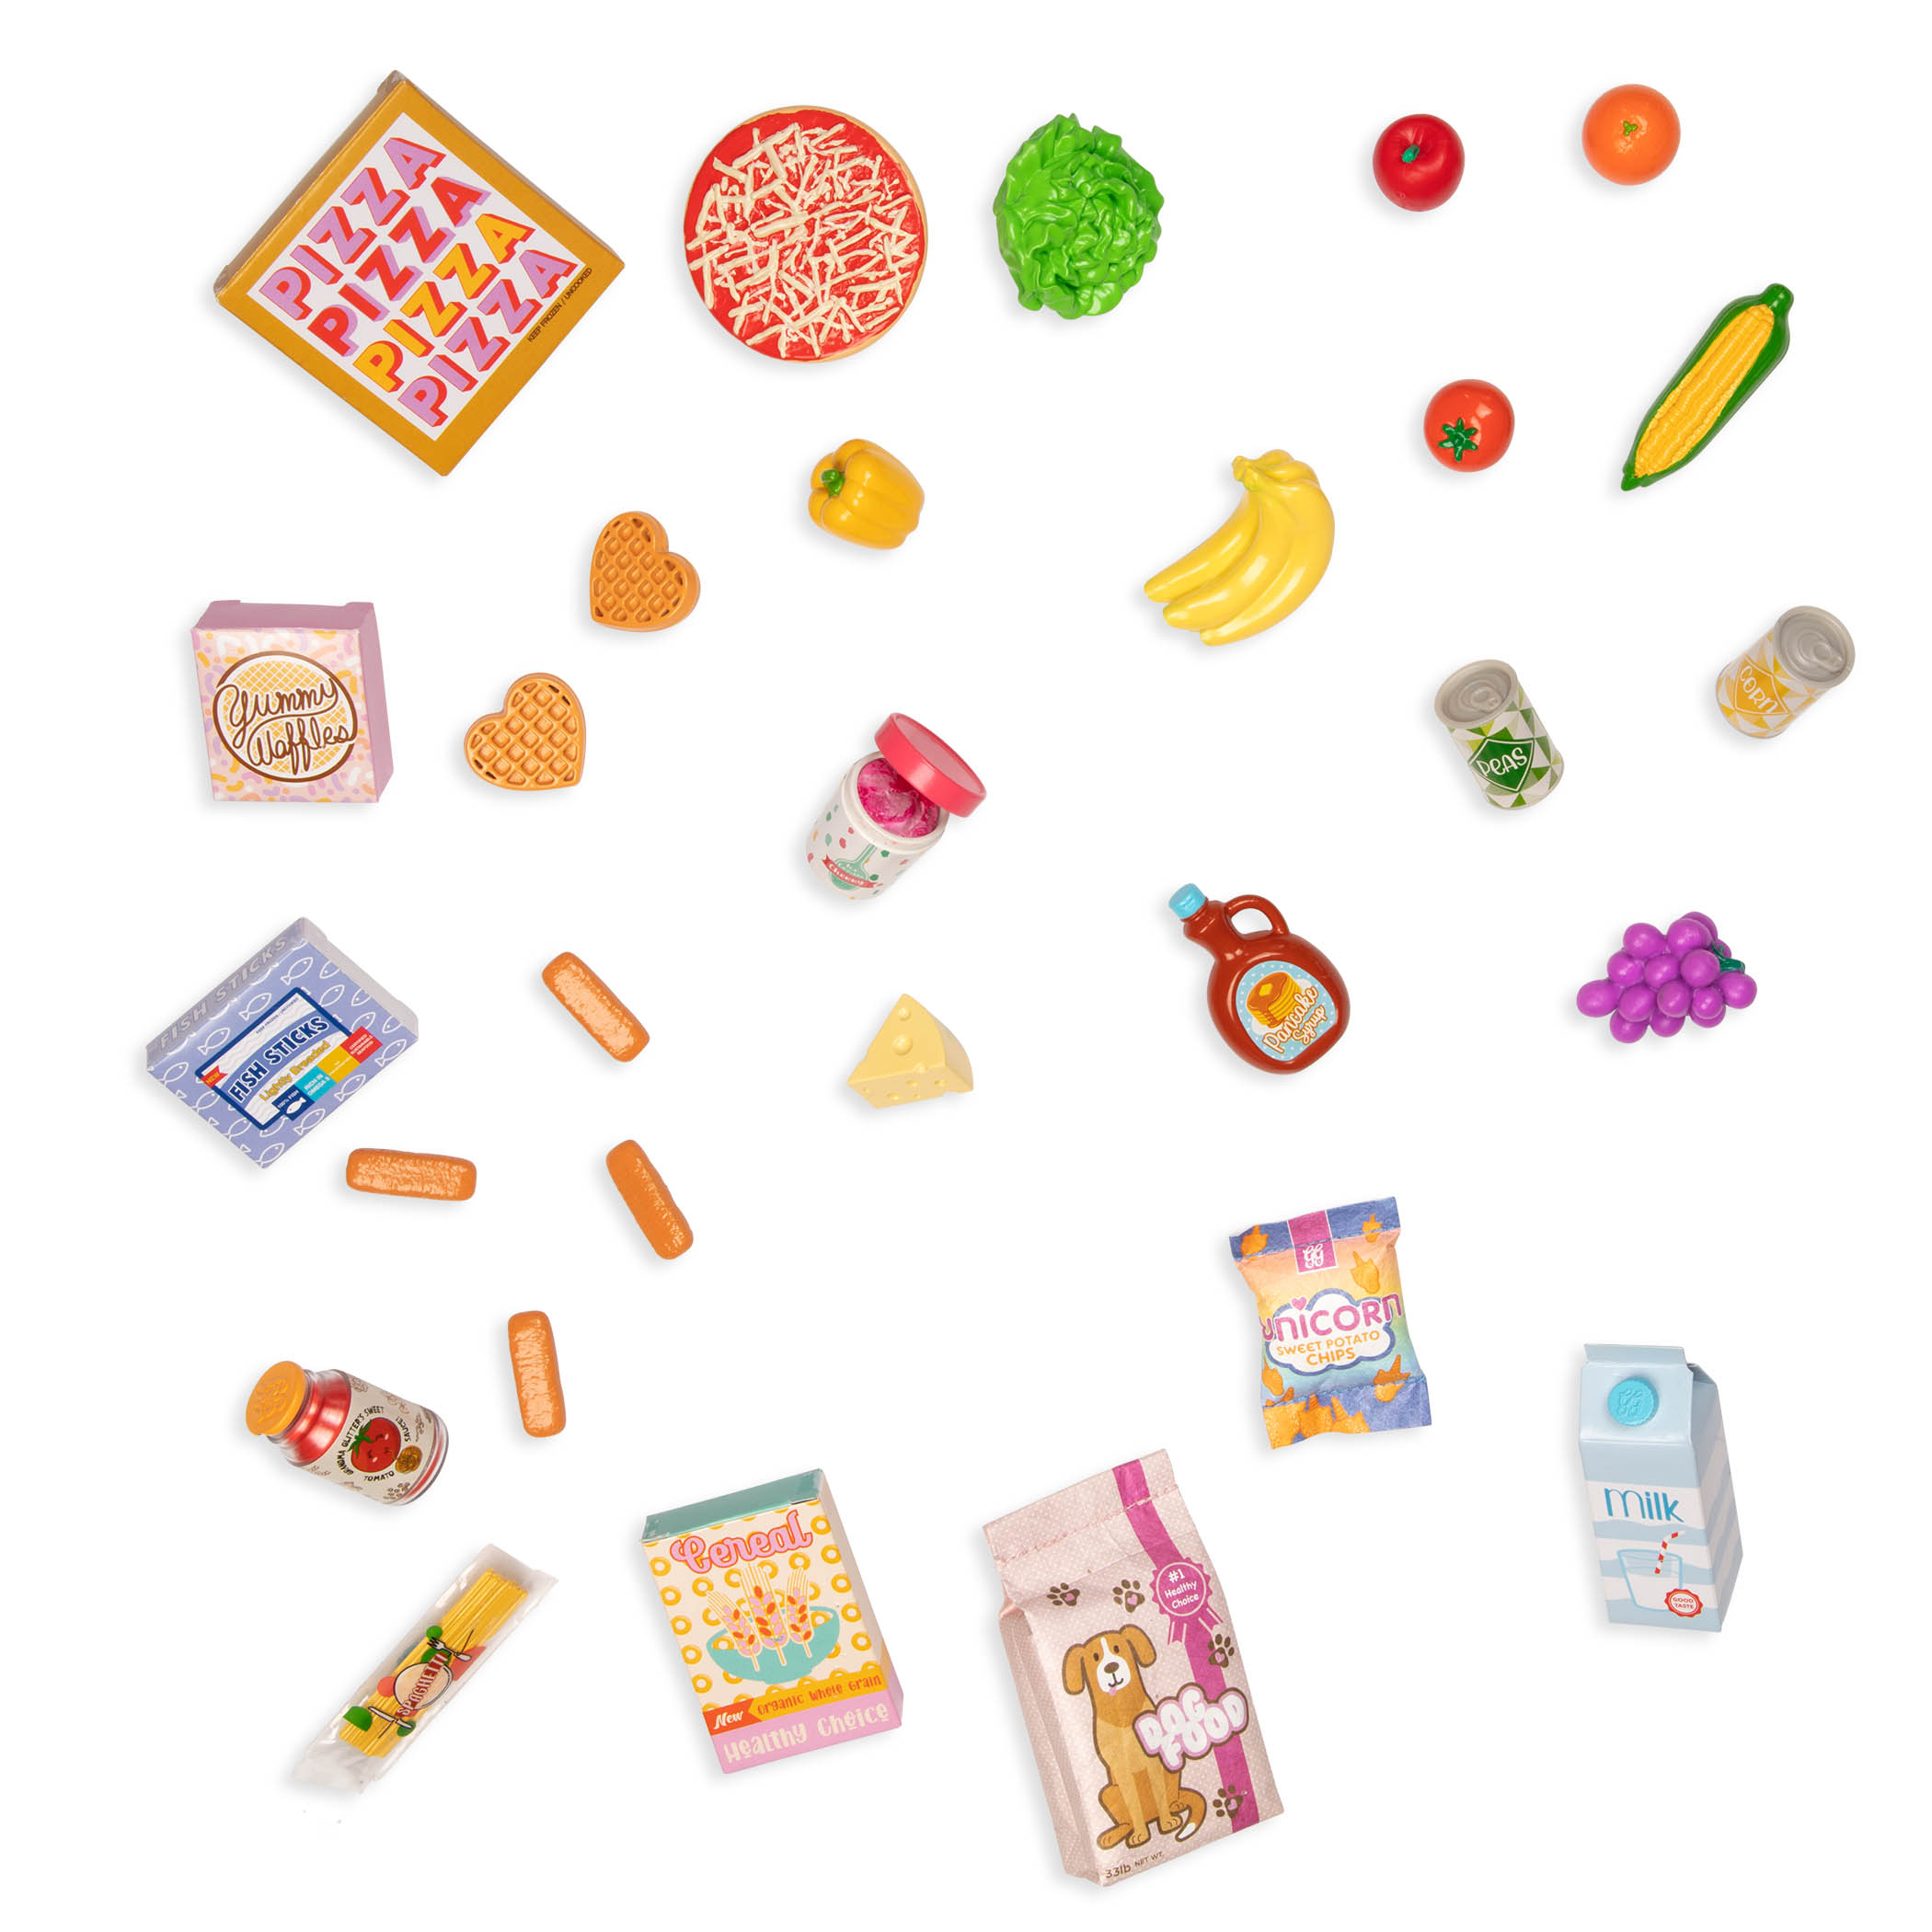 https://myglittergirls.com/wp-content/uploads/GG57164_Glitter-Girls-Dolls-Shopping-Cart-Playset-Pizza-Fruit-Pasta-Play-Food-Accessories.jpg